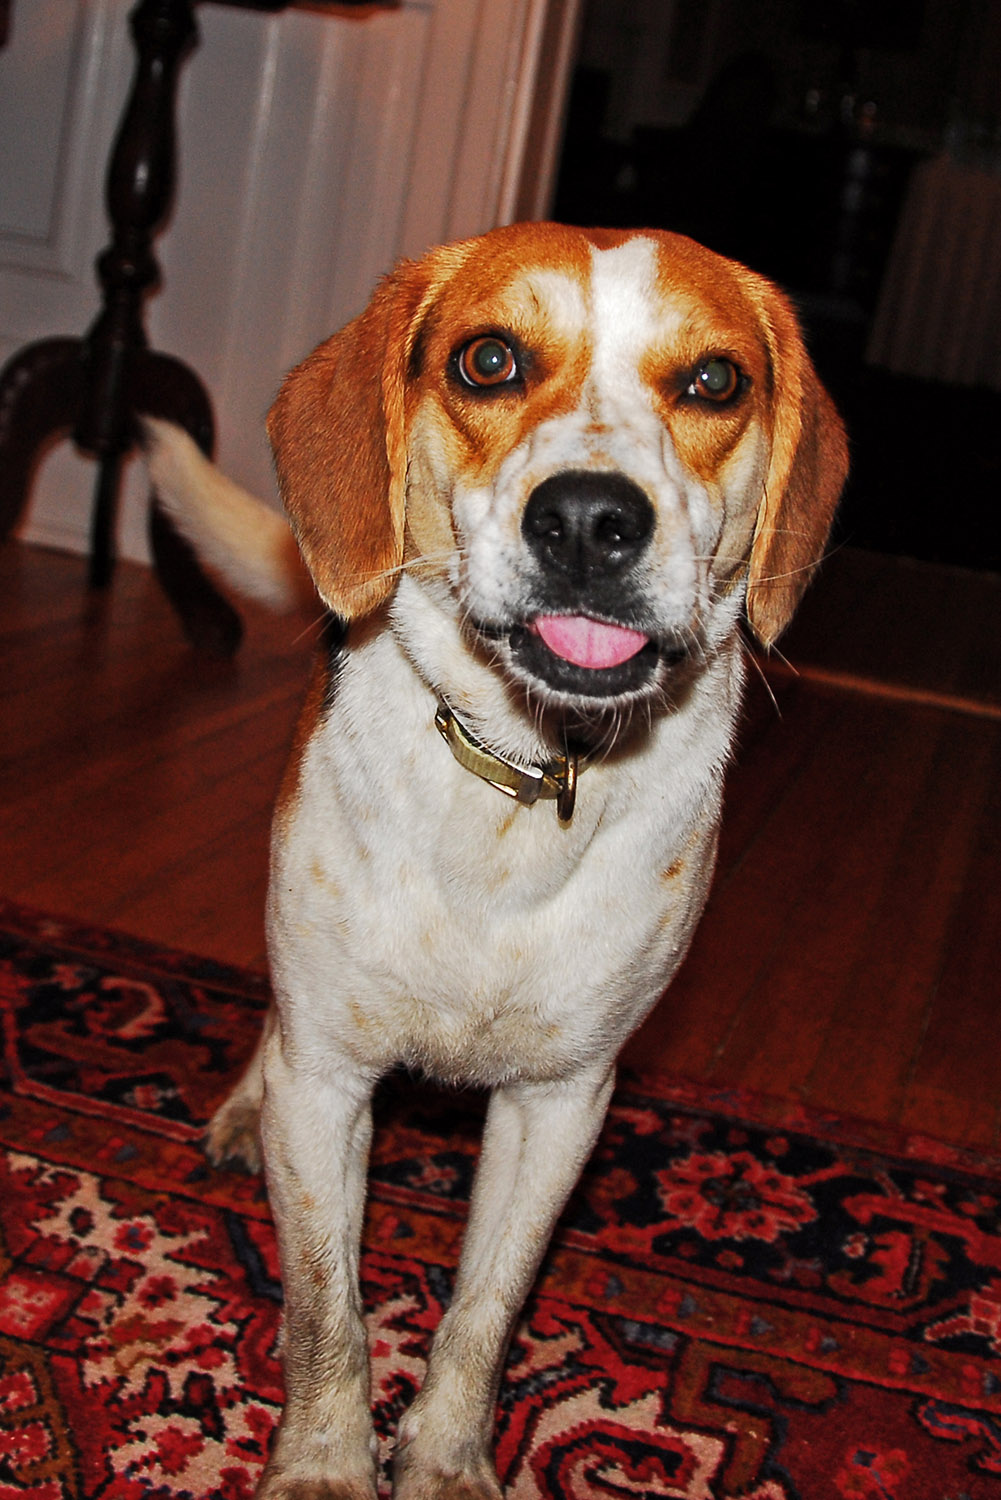 Dog_Beagle_Pet_Tongue_Silly_Indoors_Staring.jpg